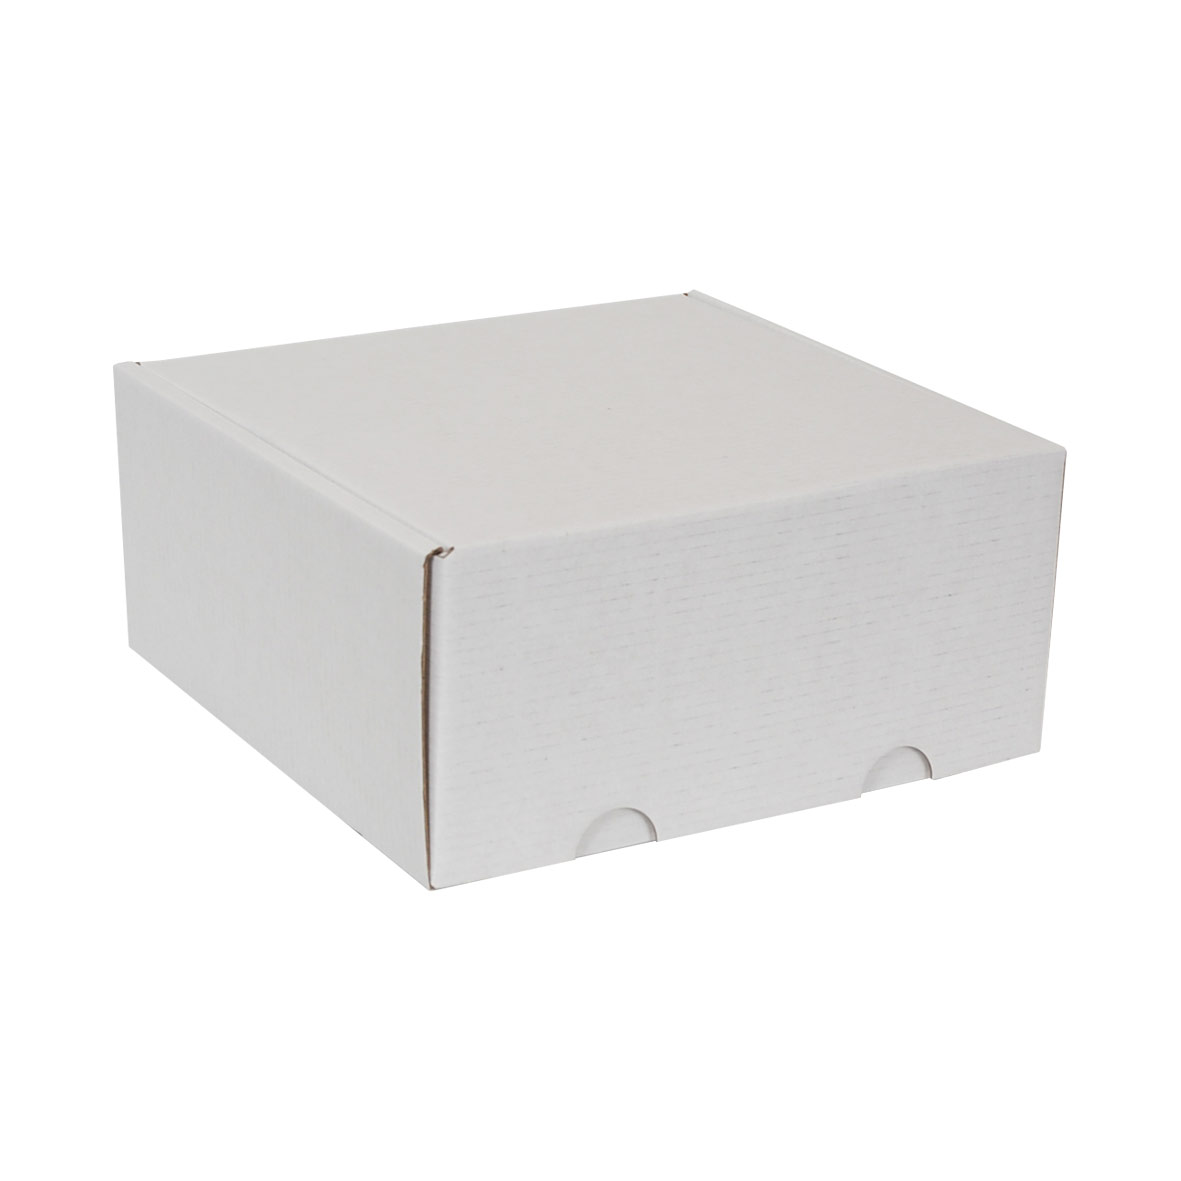 Boîte carton micro-cannelé réversible kraft/blanc 23 cm